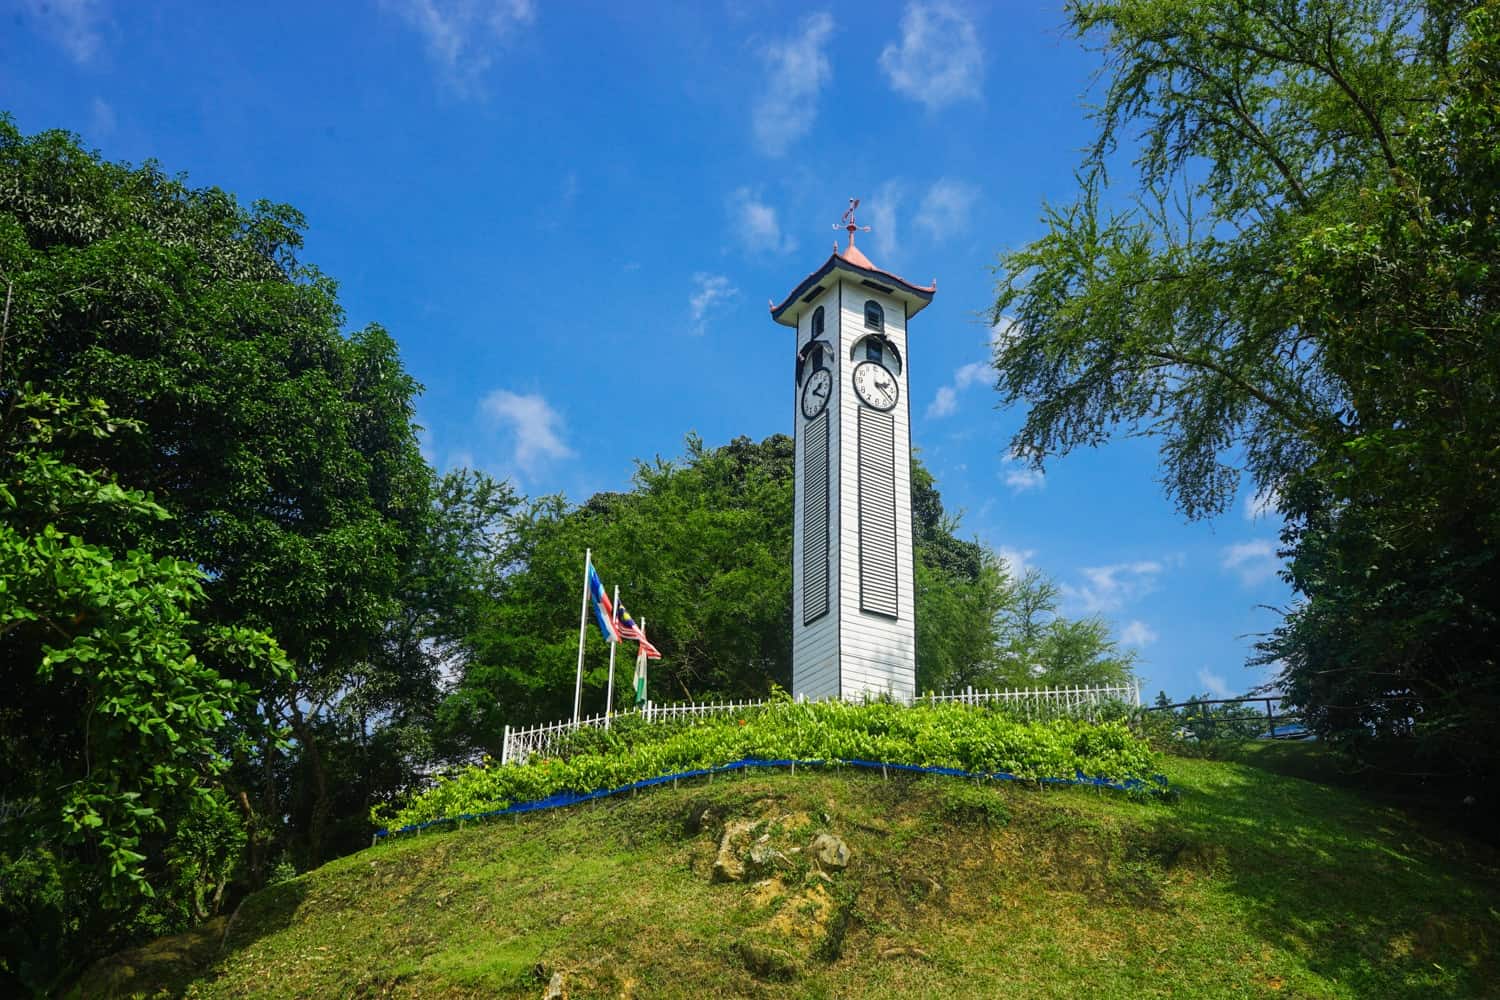 Kota Kinabalu clock tower